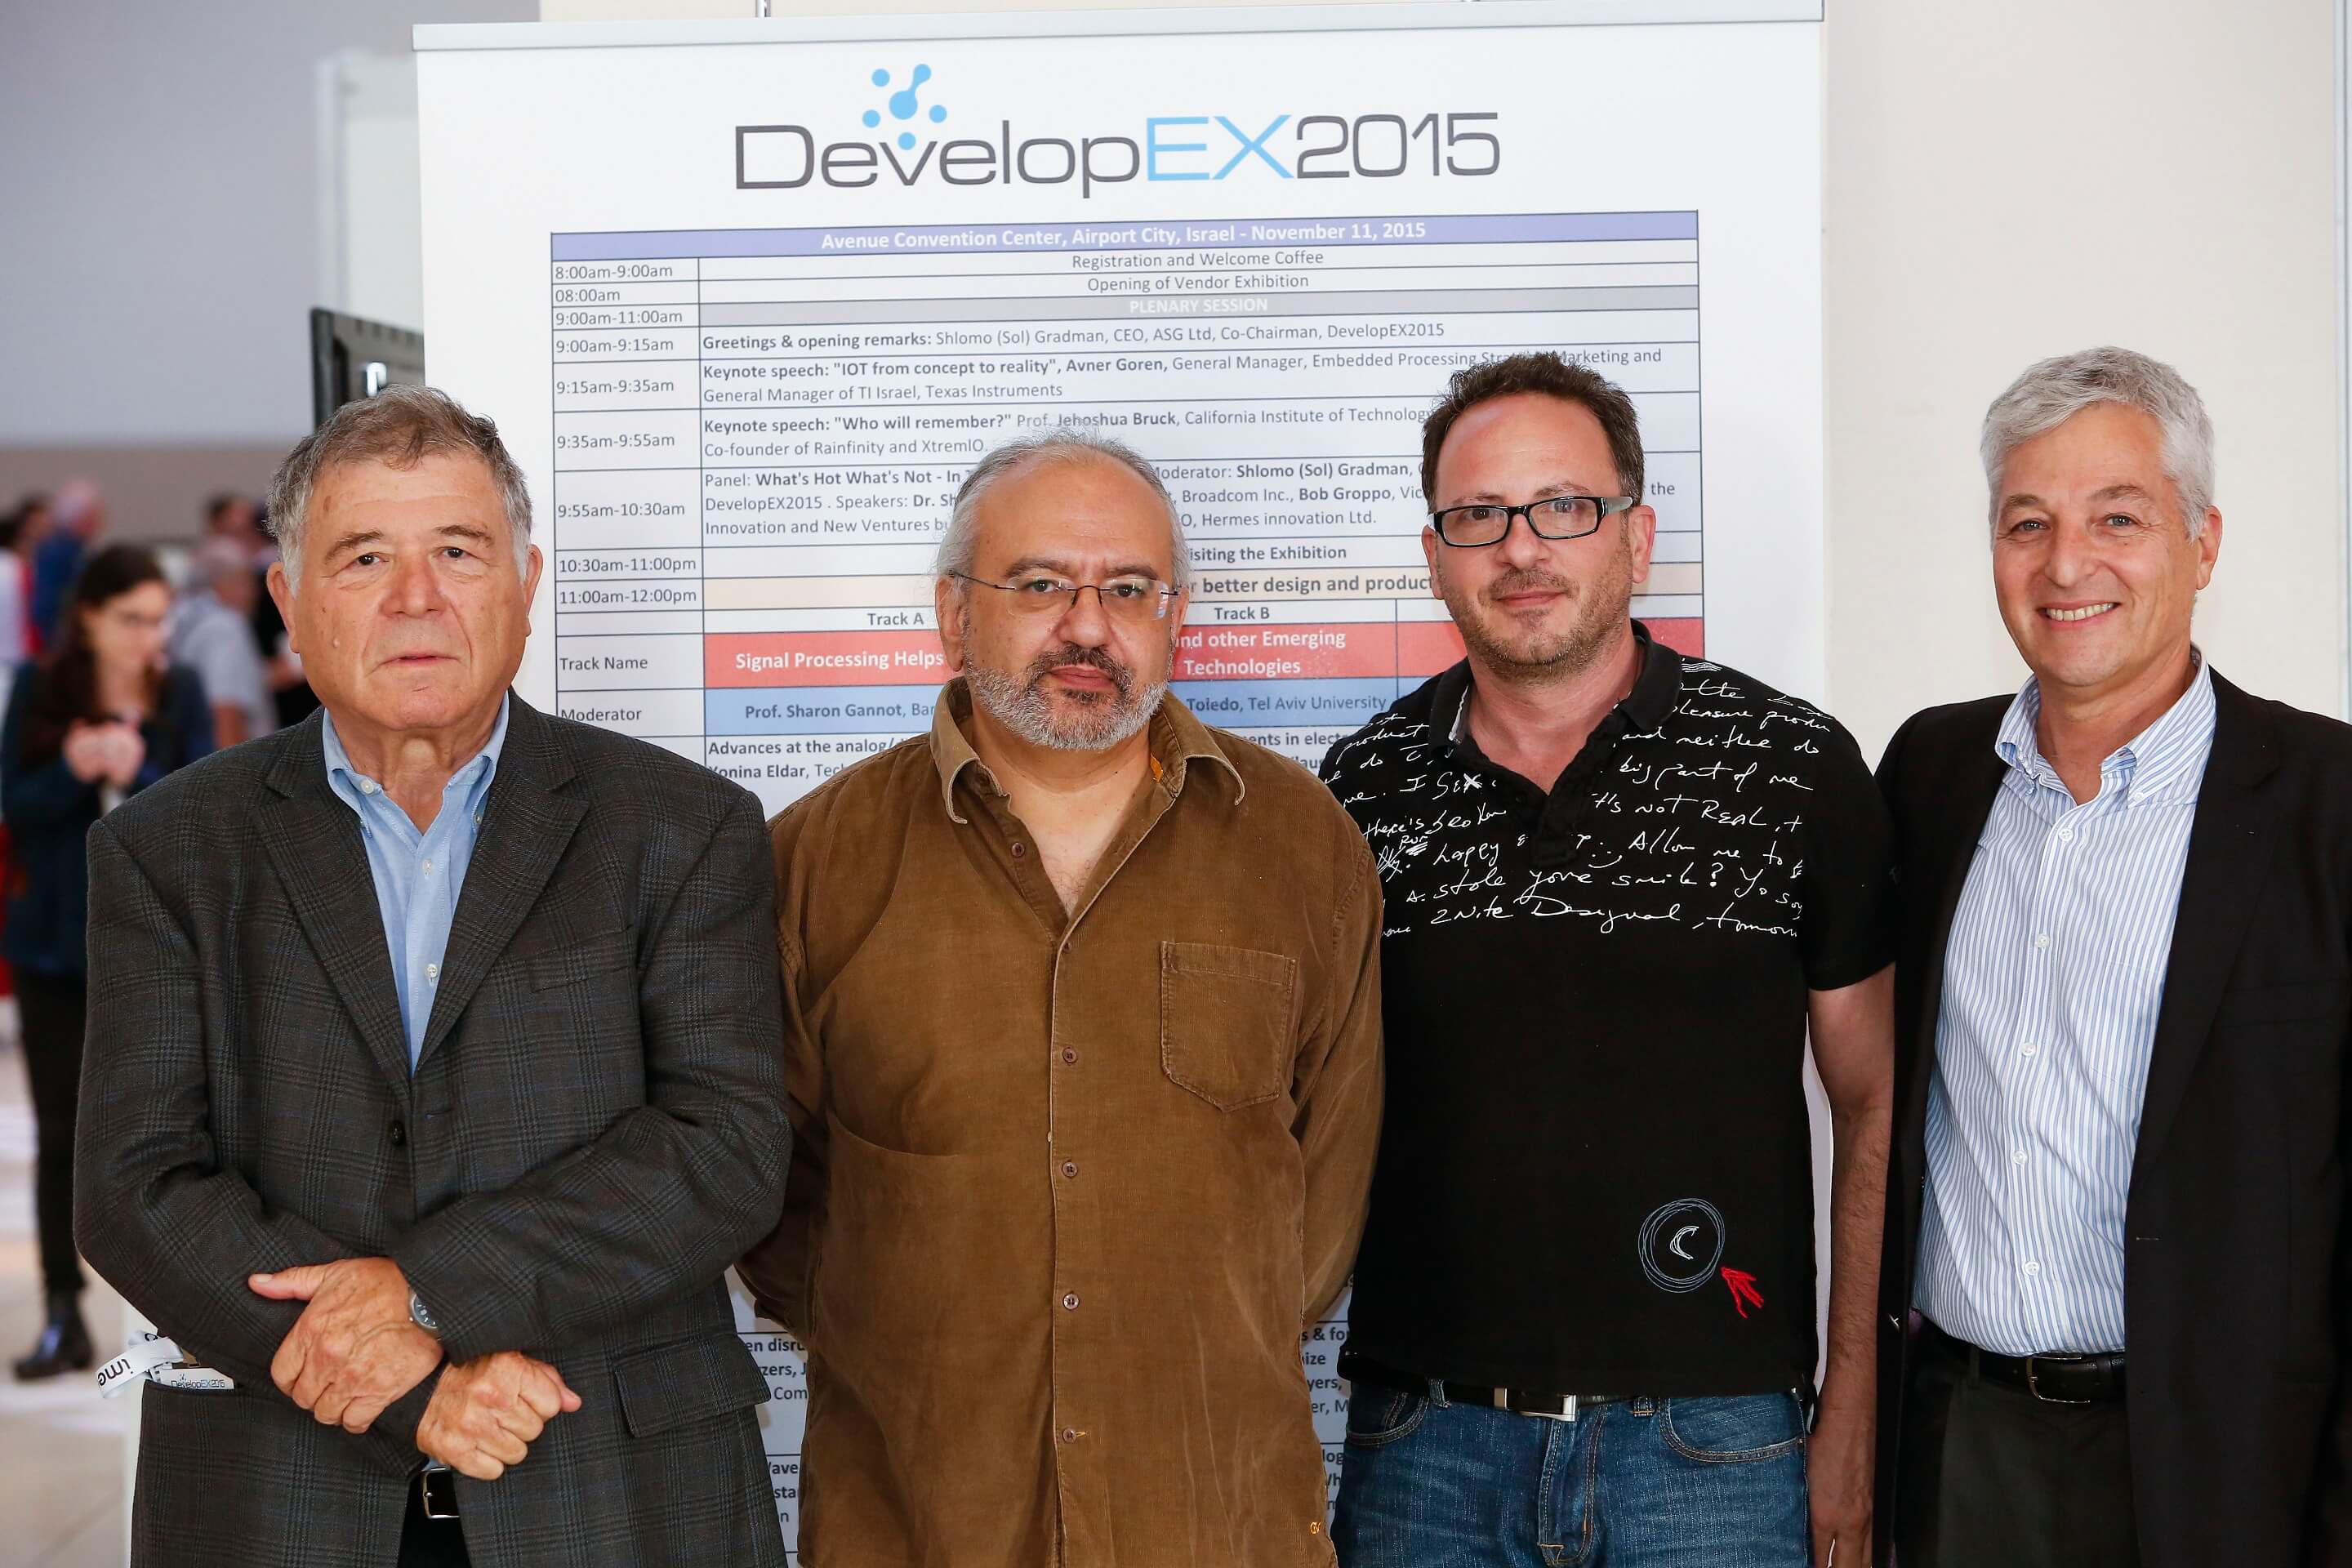 Participants of the entrepreneurship panel at the DevlopEX2015 conference. From the right: Shlomo Gerdman, Doron Marco, Prof. Simon Litzin, Gabi Idan. Photo: Kobi Kantor